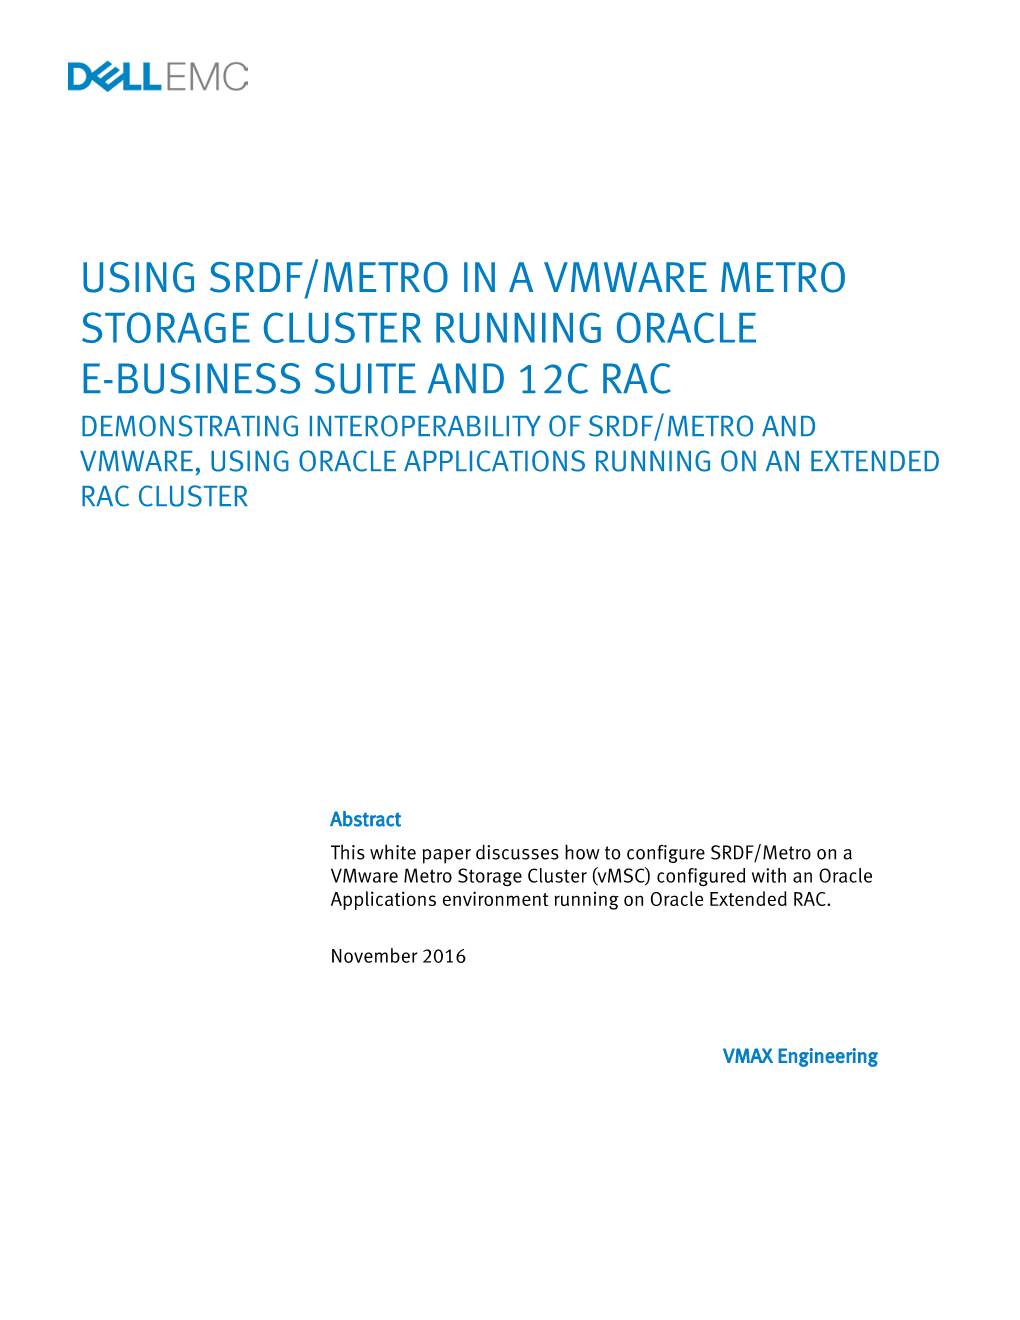 Using SRDF/Metro in a Vmware Metro Storage Cluster Running Oracle E